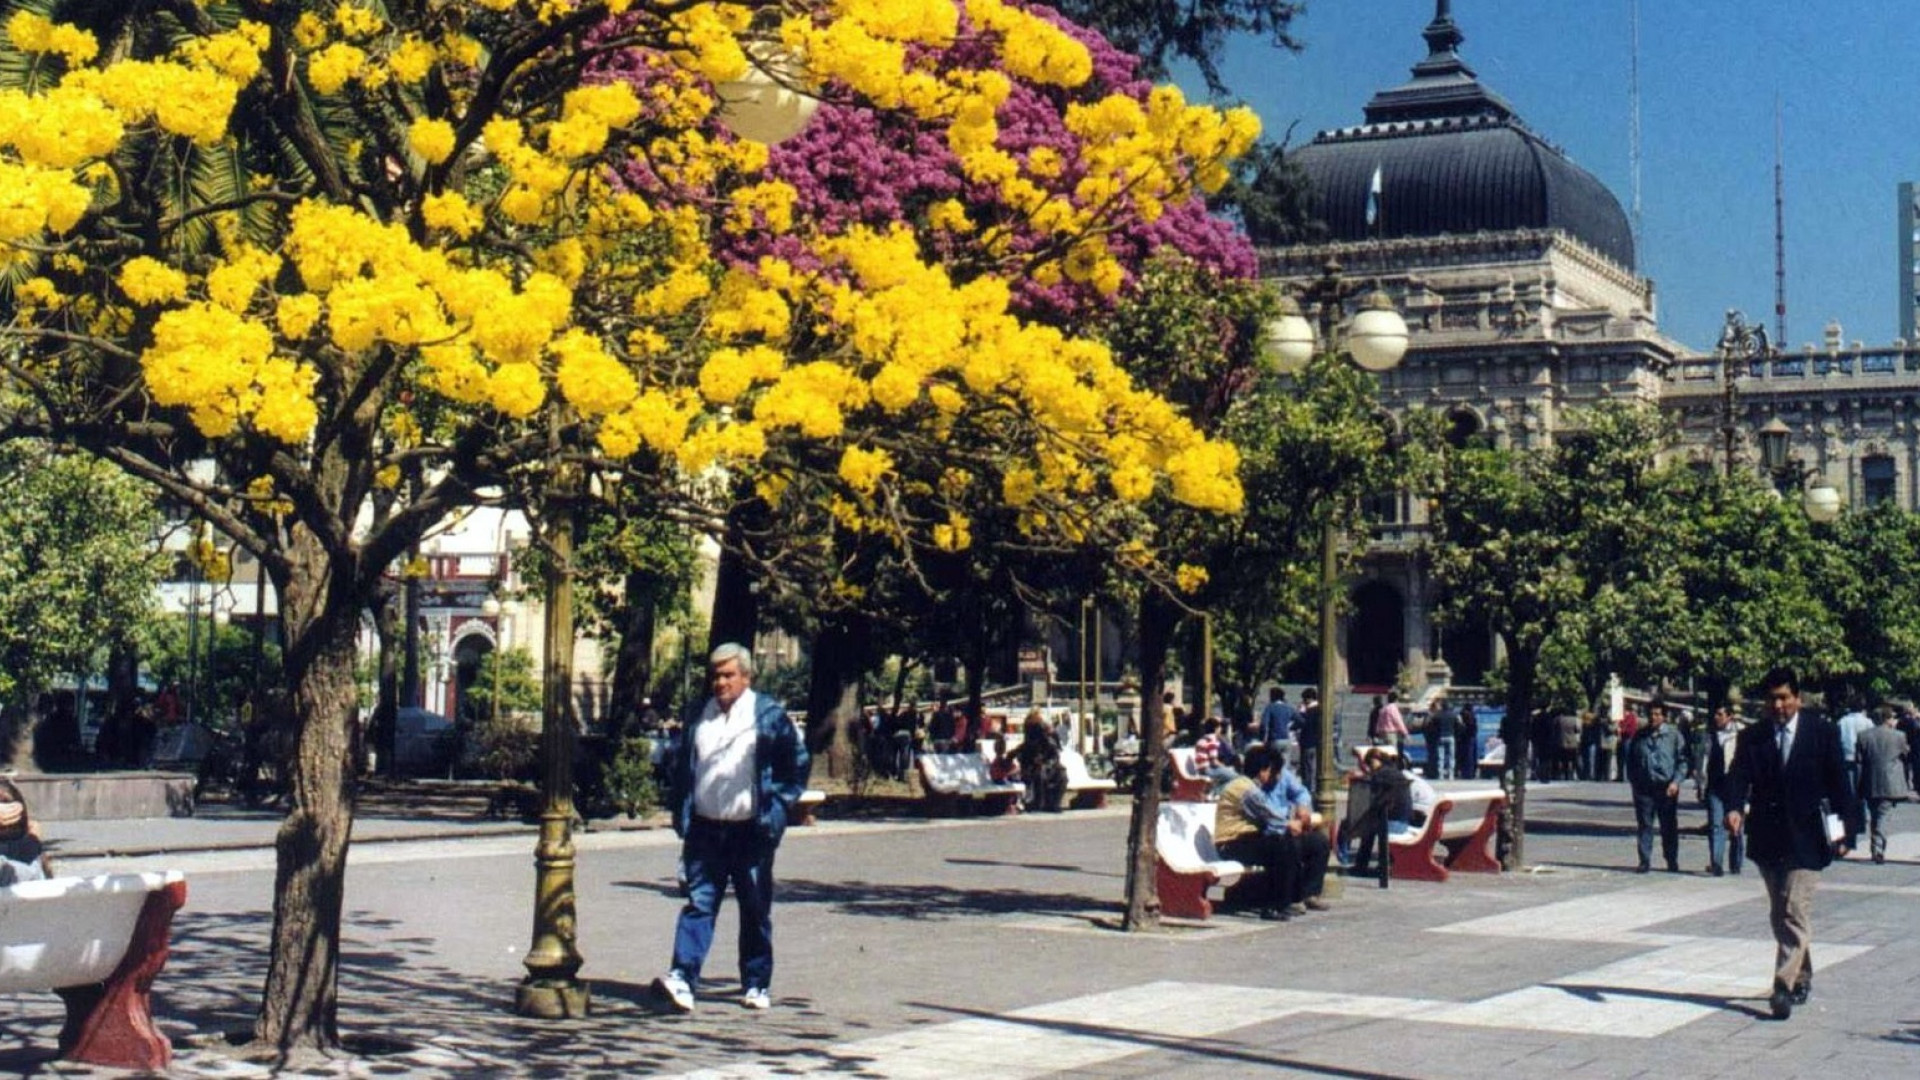 Tucumán